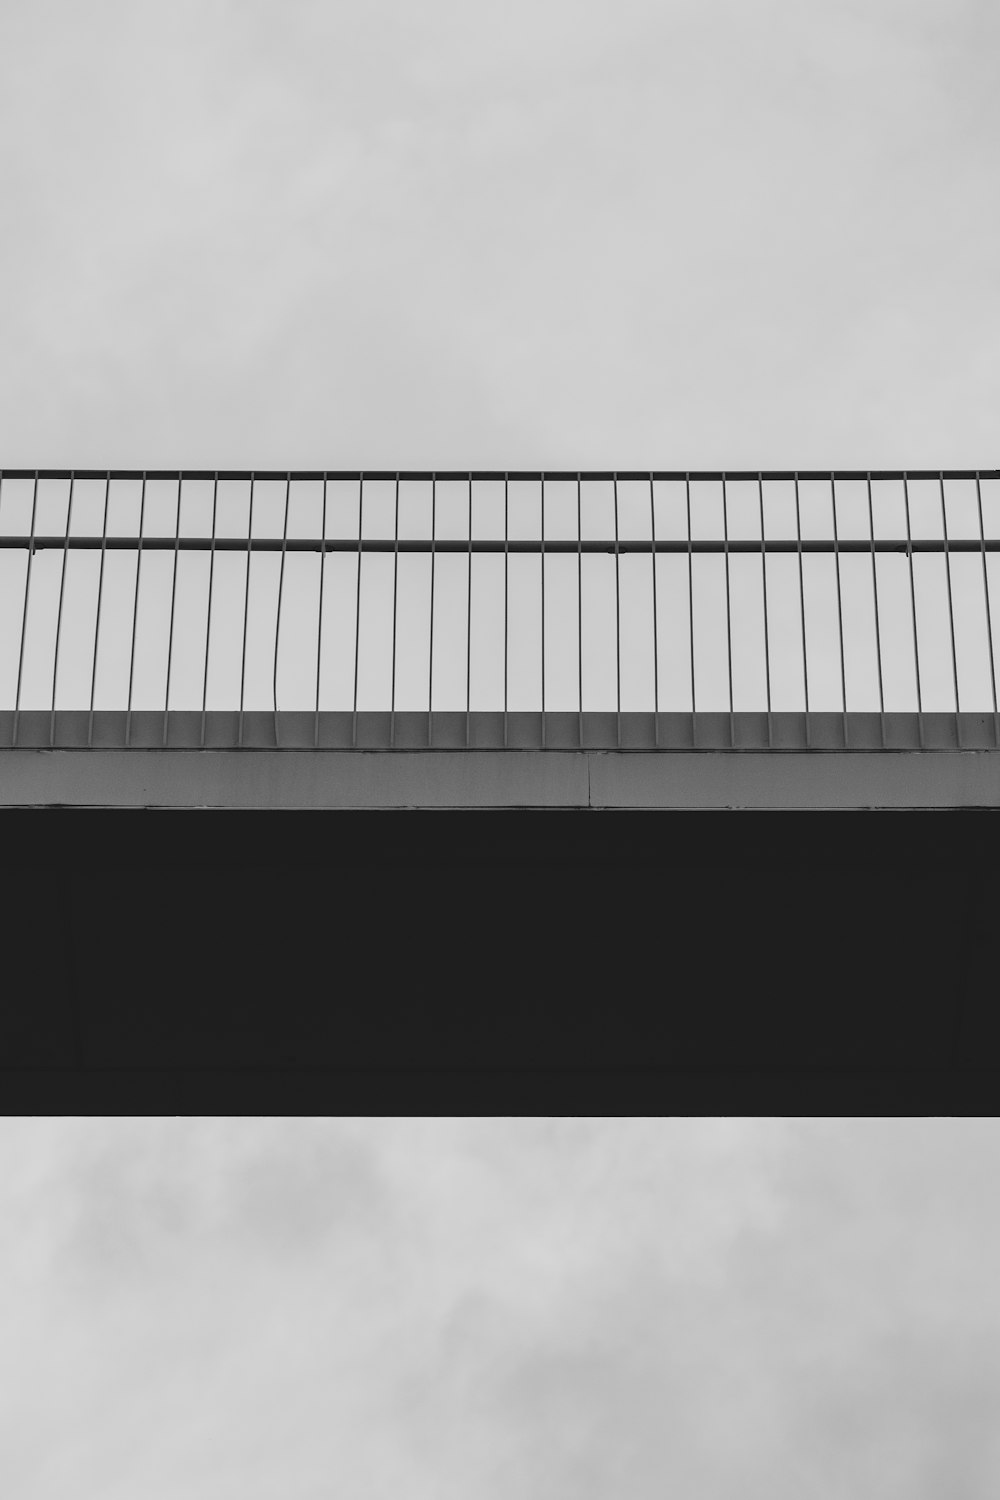 low-angle photography of gray concrete bridge